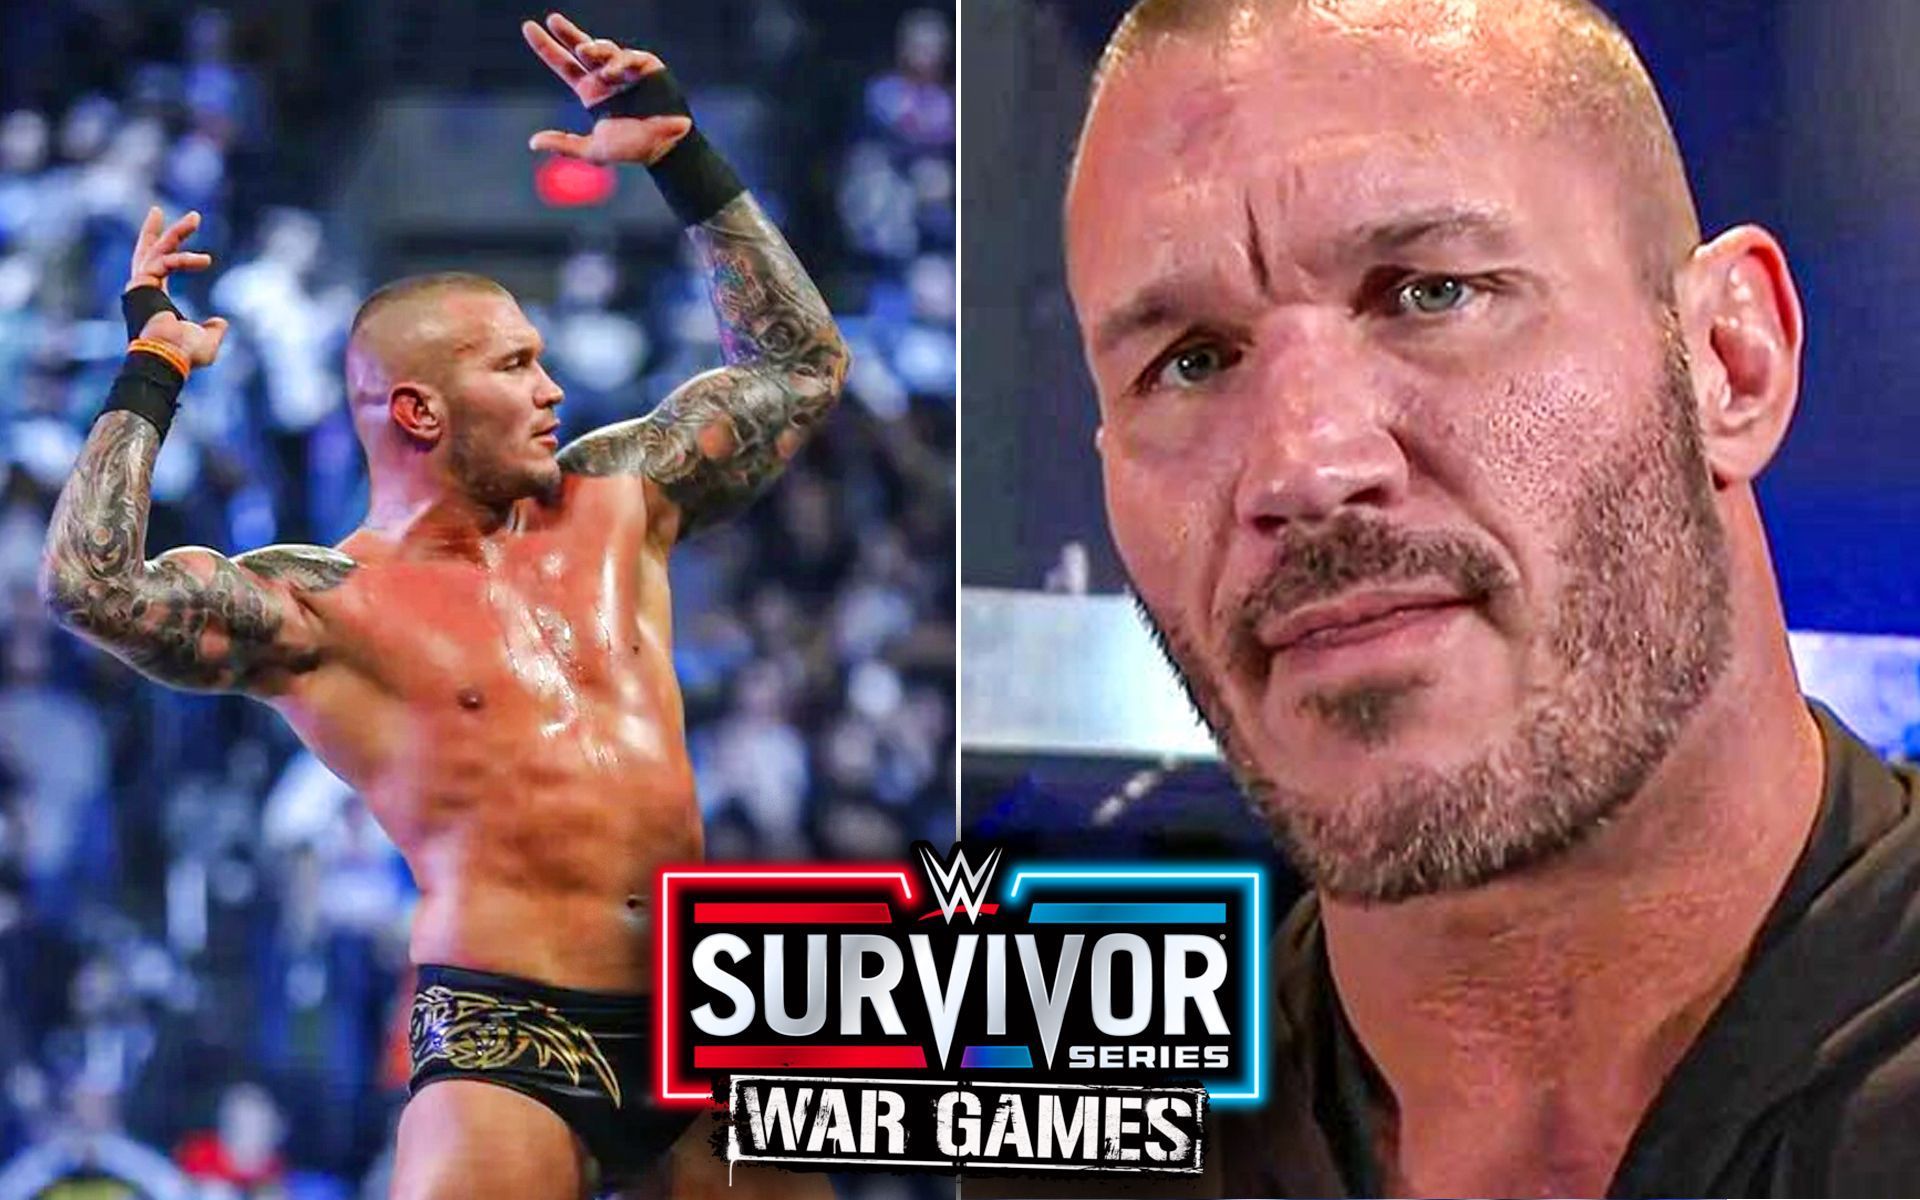 Randy Orton return seems to be on the horizon.